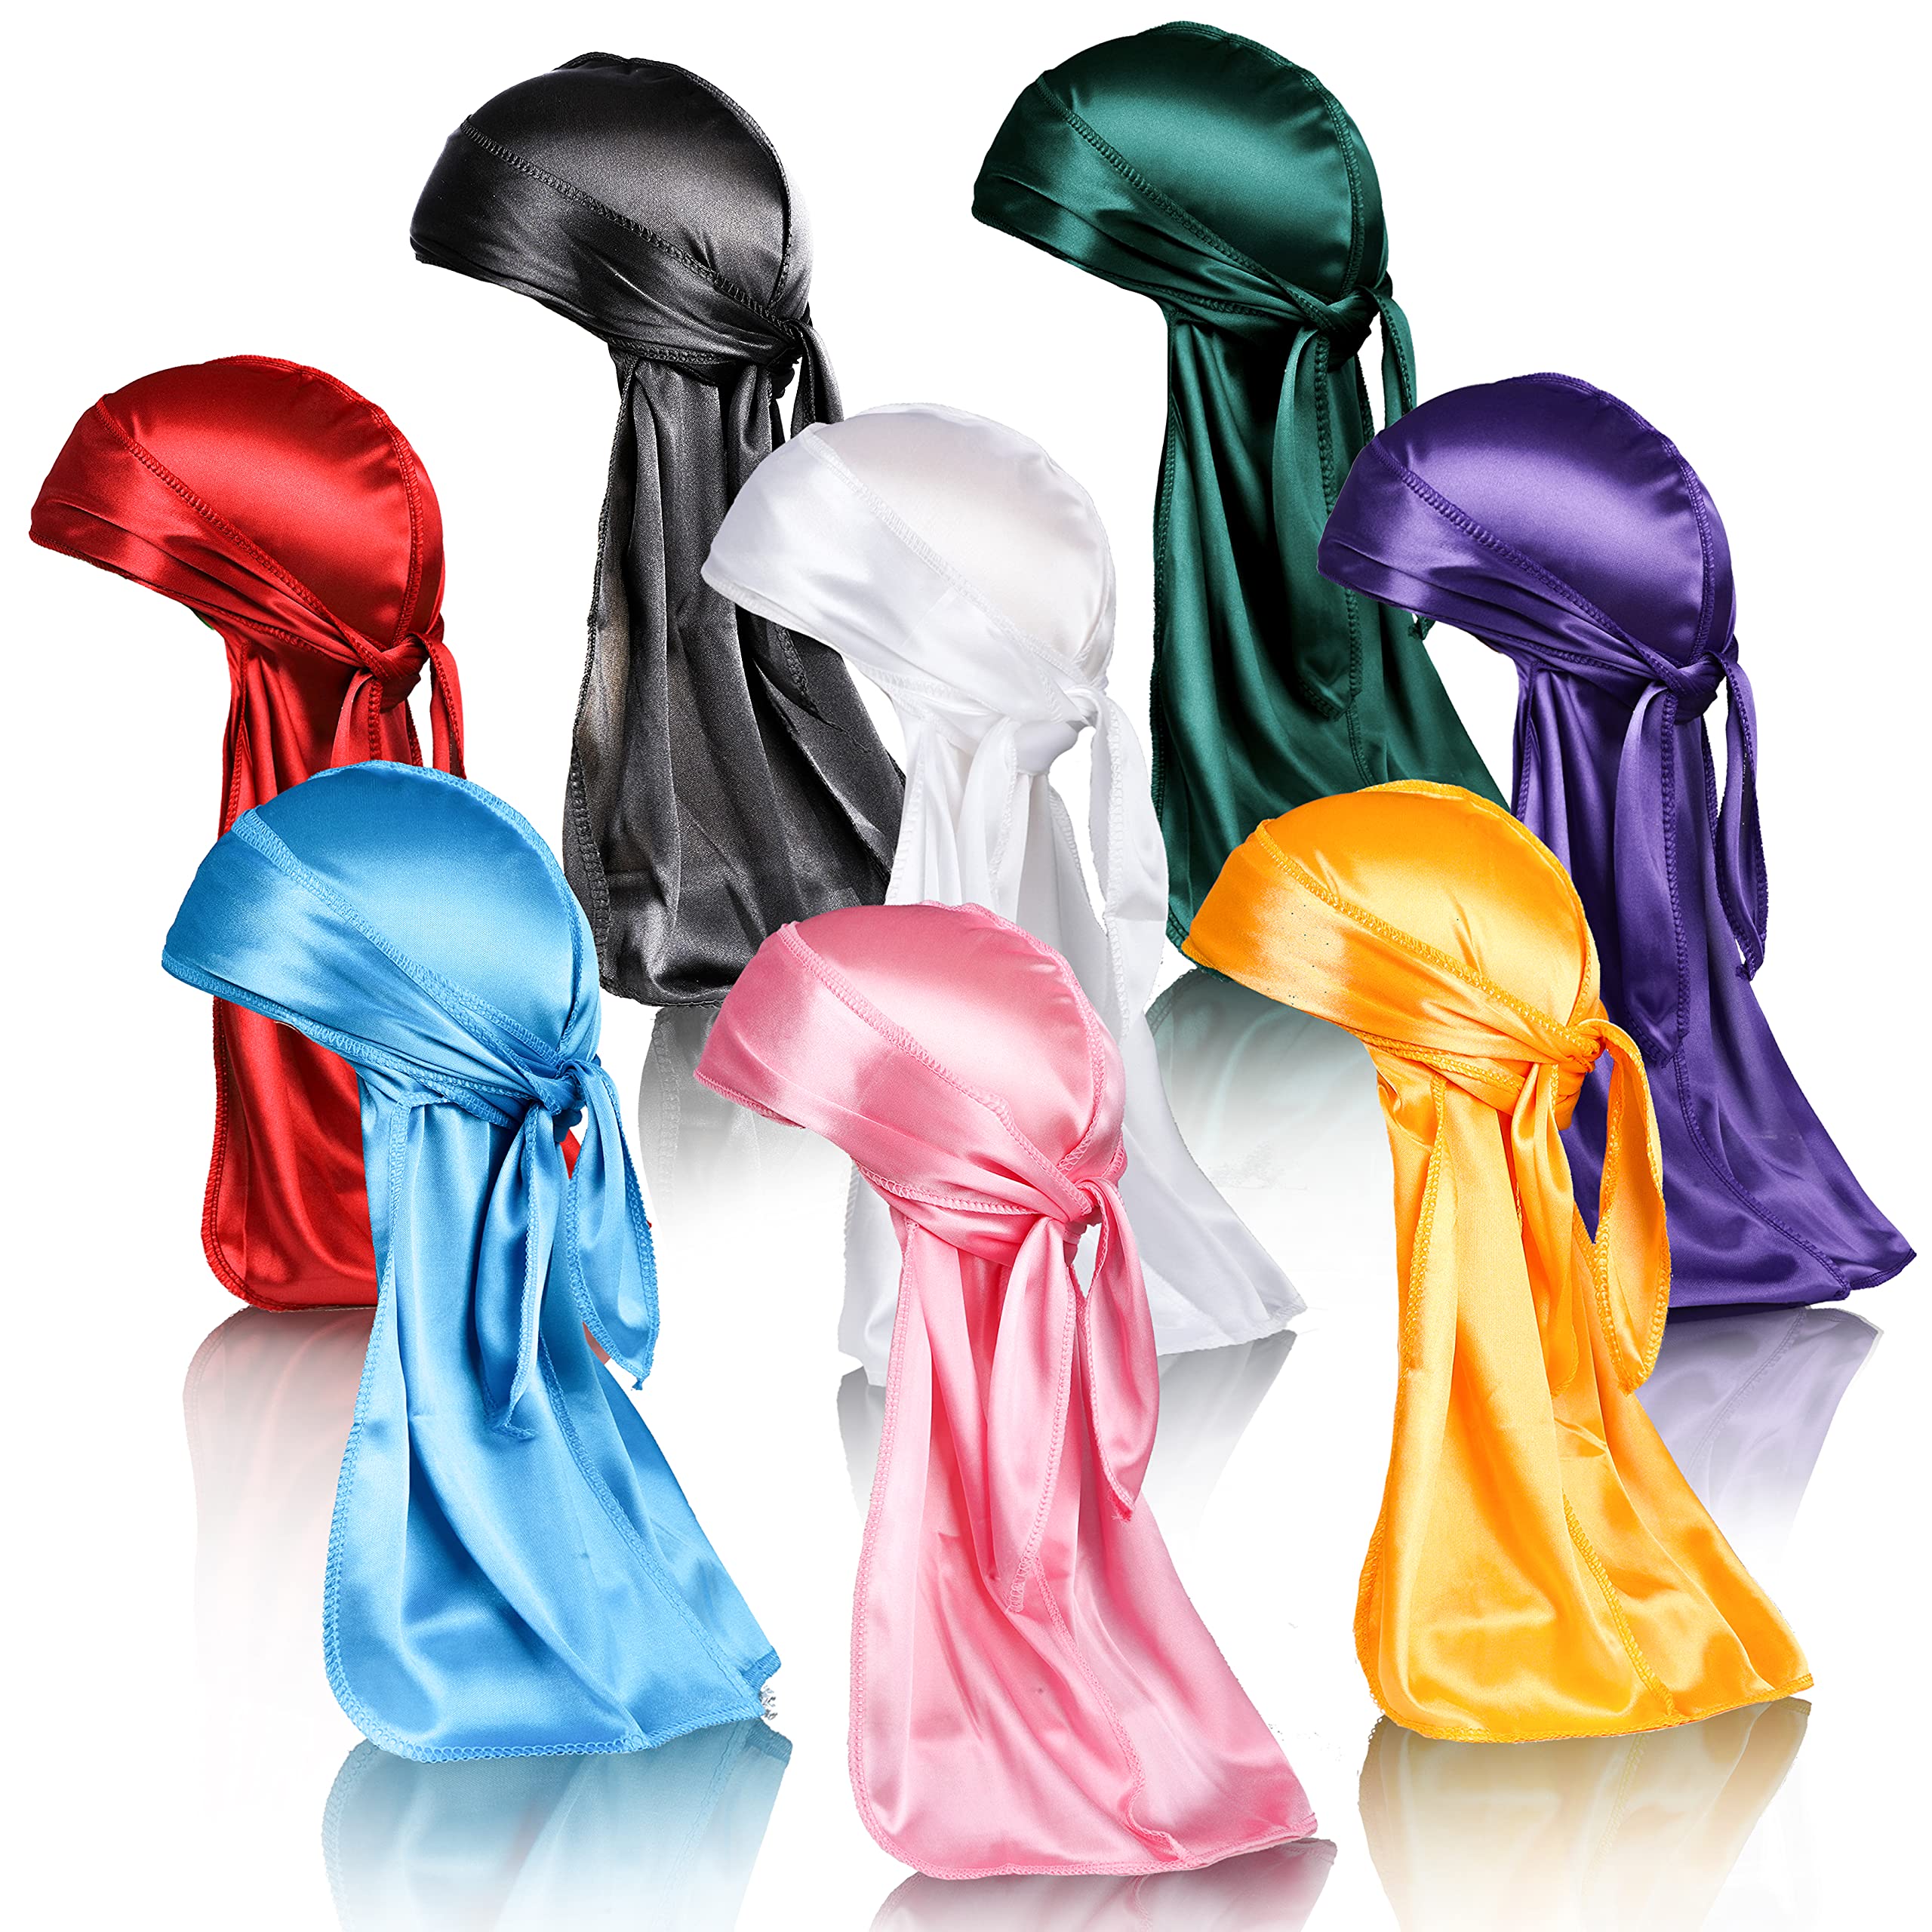 SHYNE Silky Durag - Multi Colour Options | Perfect for Waves, Braids & Locs  | Premium Silk Du Rags